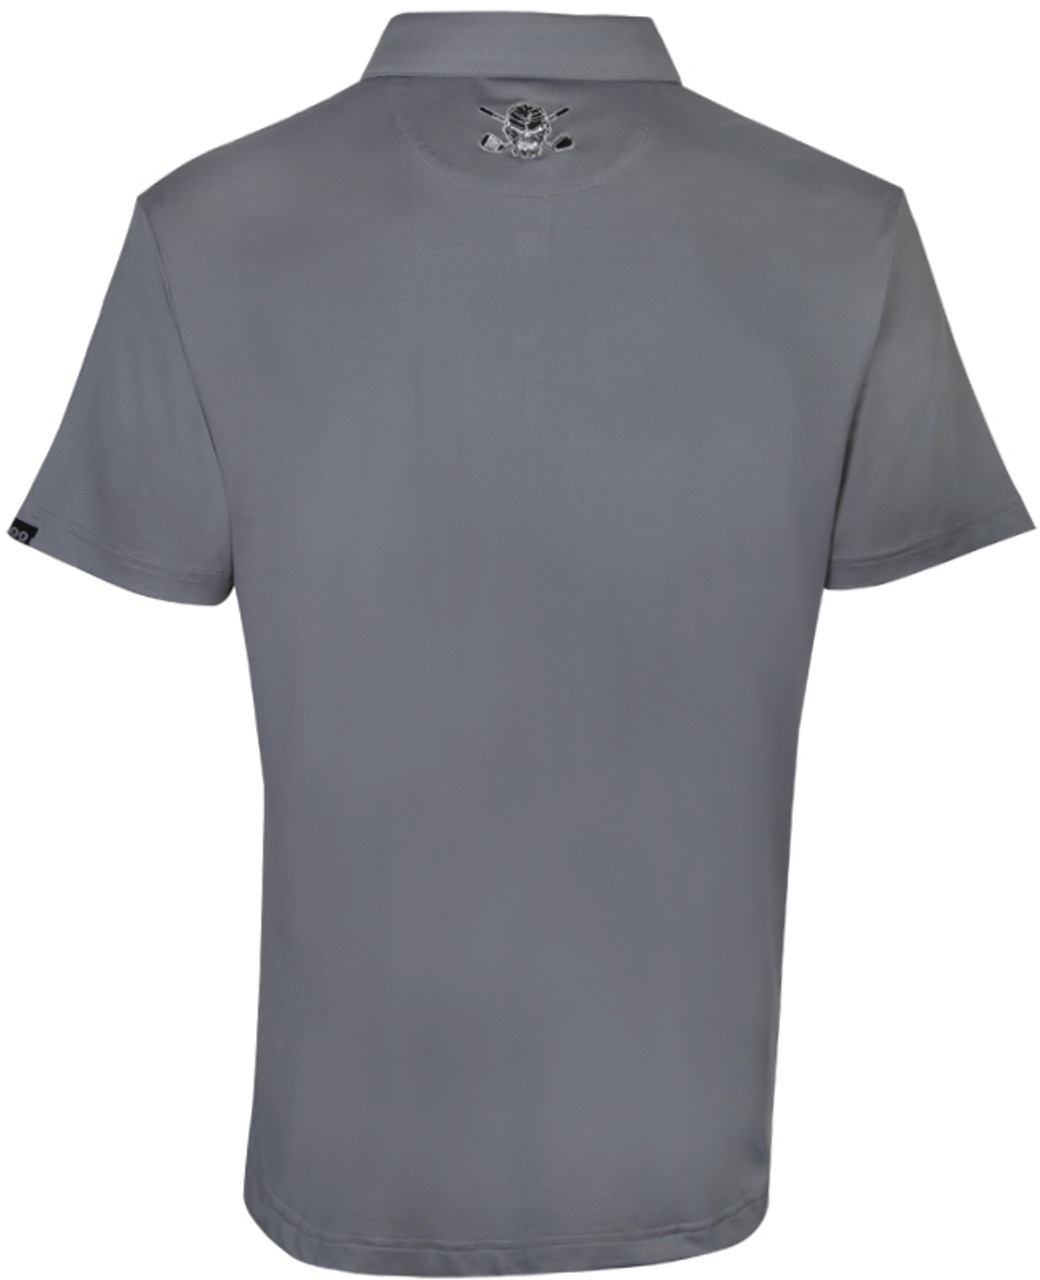 Geometric graphic print golf shirt Men's White Golf Polo (Charcoal) Wild Golf  Shirts with skulls